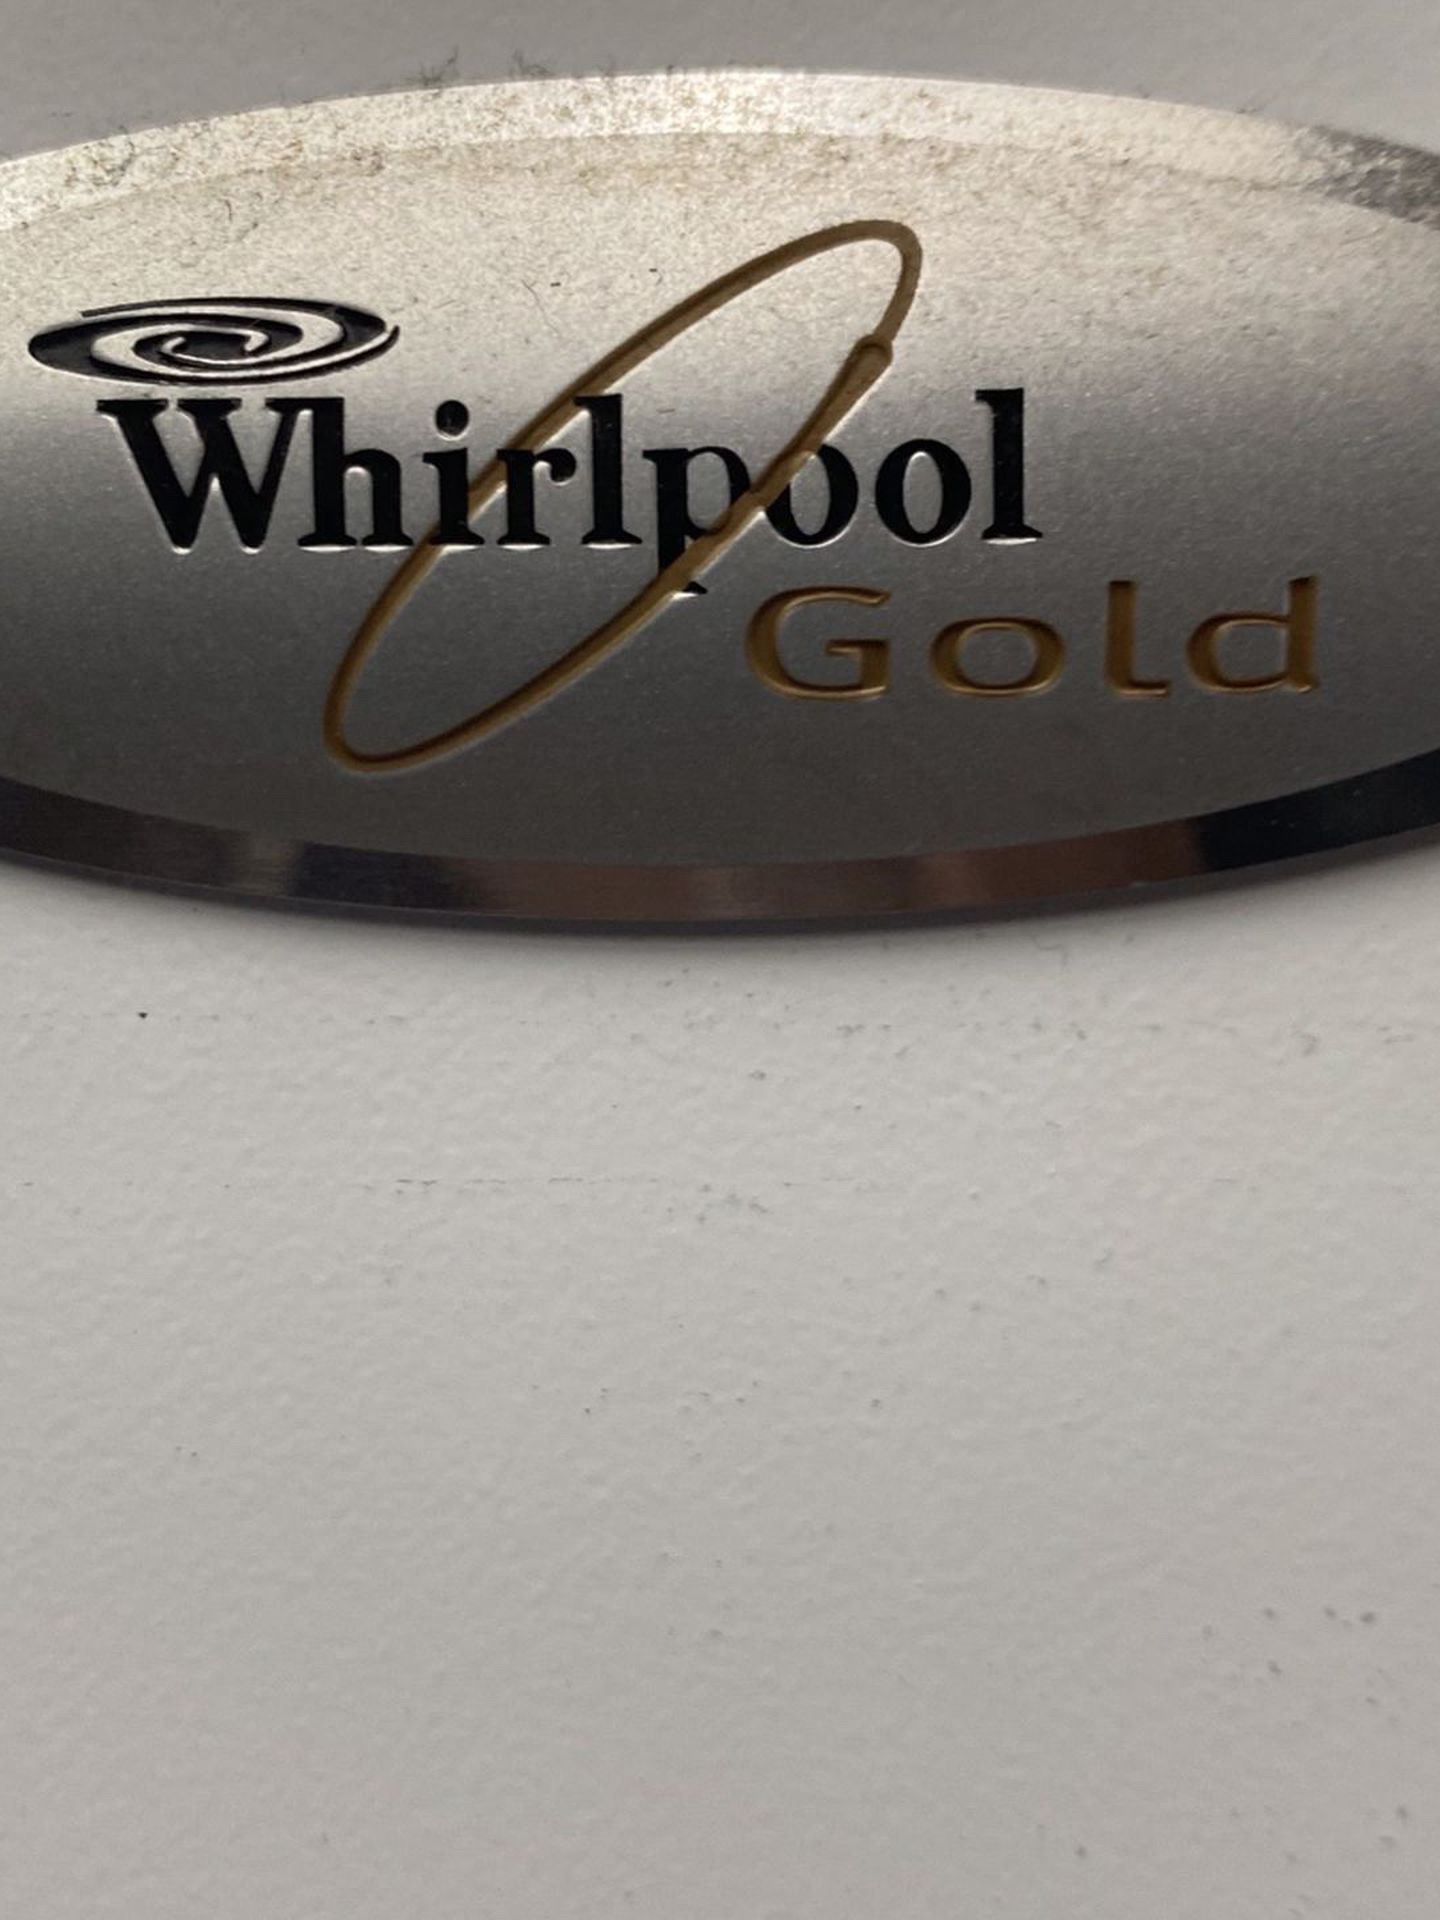 Whirlpool Gold Fridge